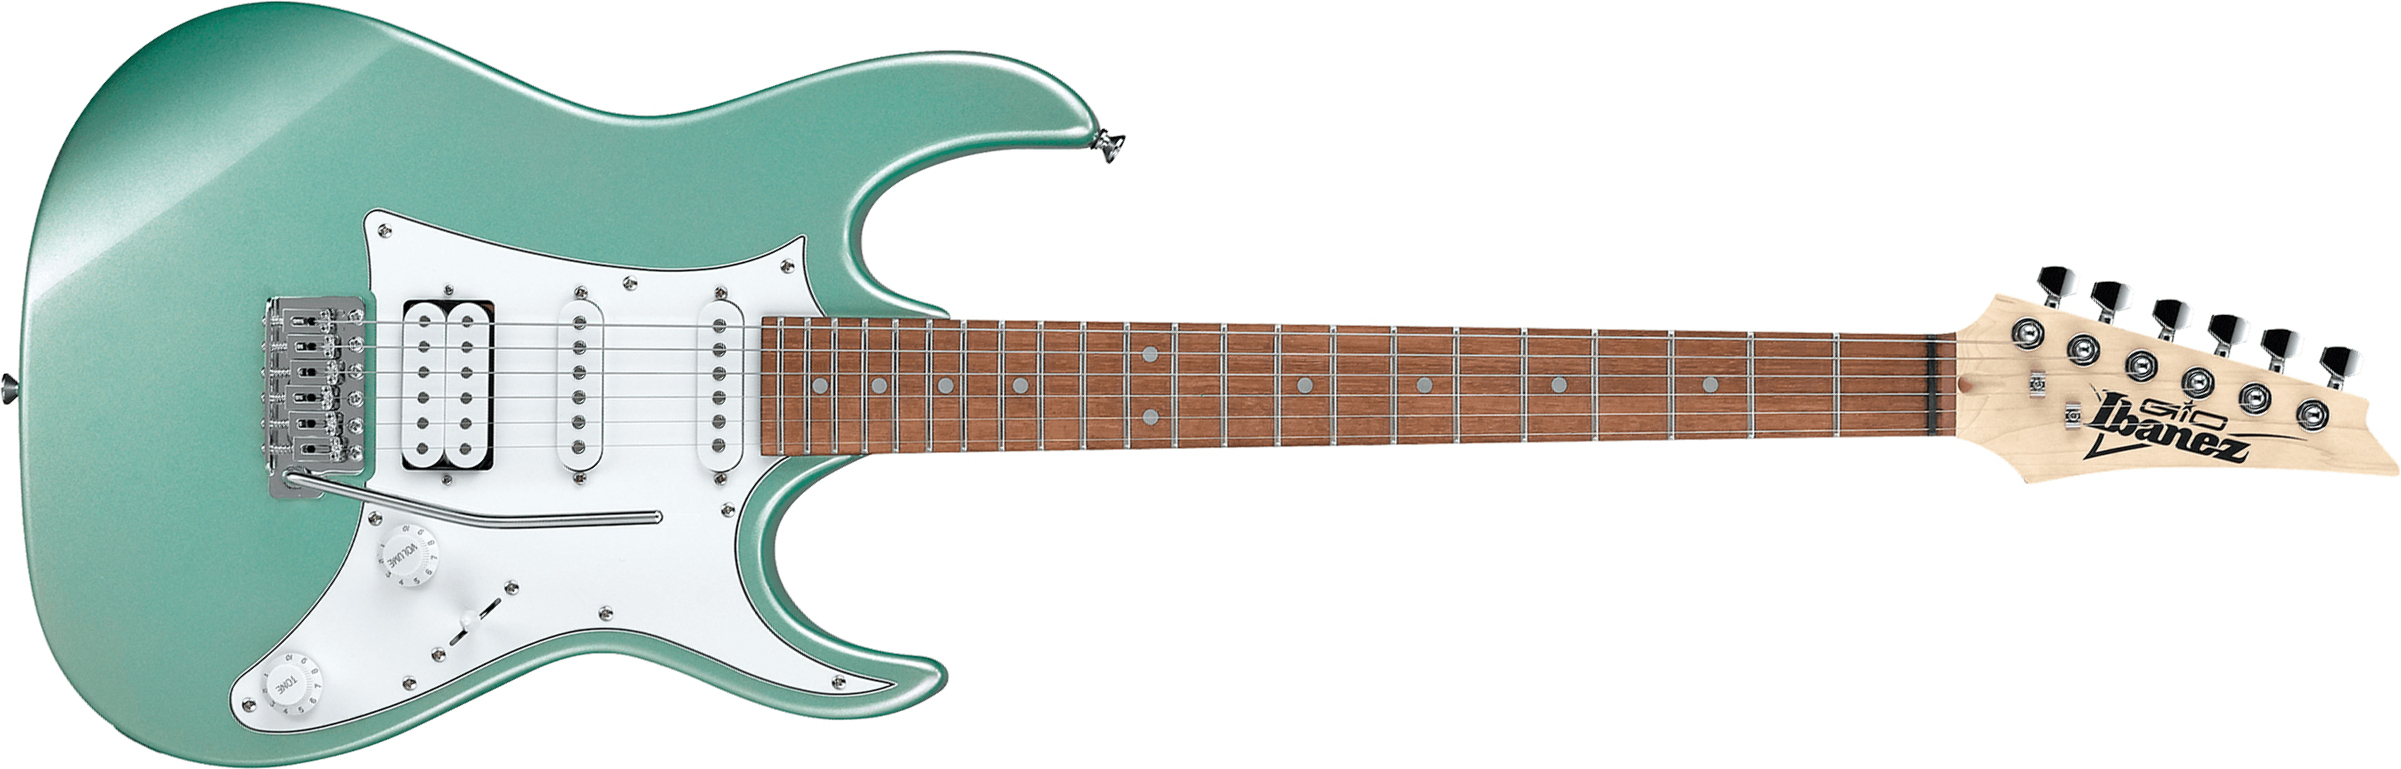 Ibanez Grx40 Mgn Gio Hss Trem Jat - Metallic Light Green - Str shape electric guitar - Main picture